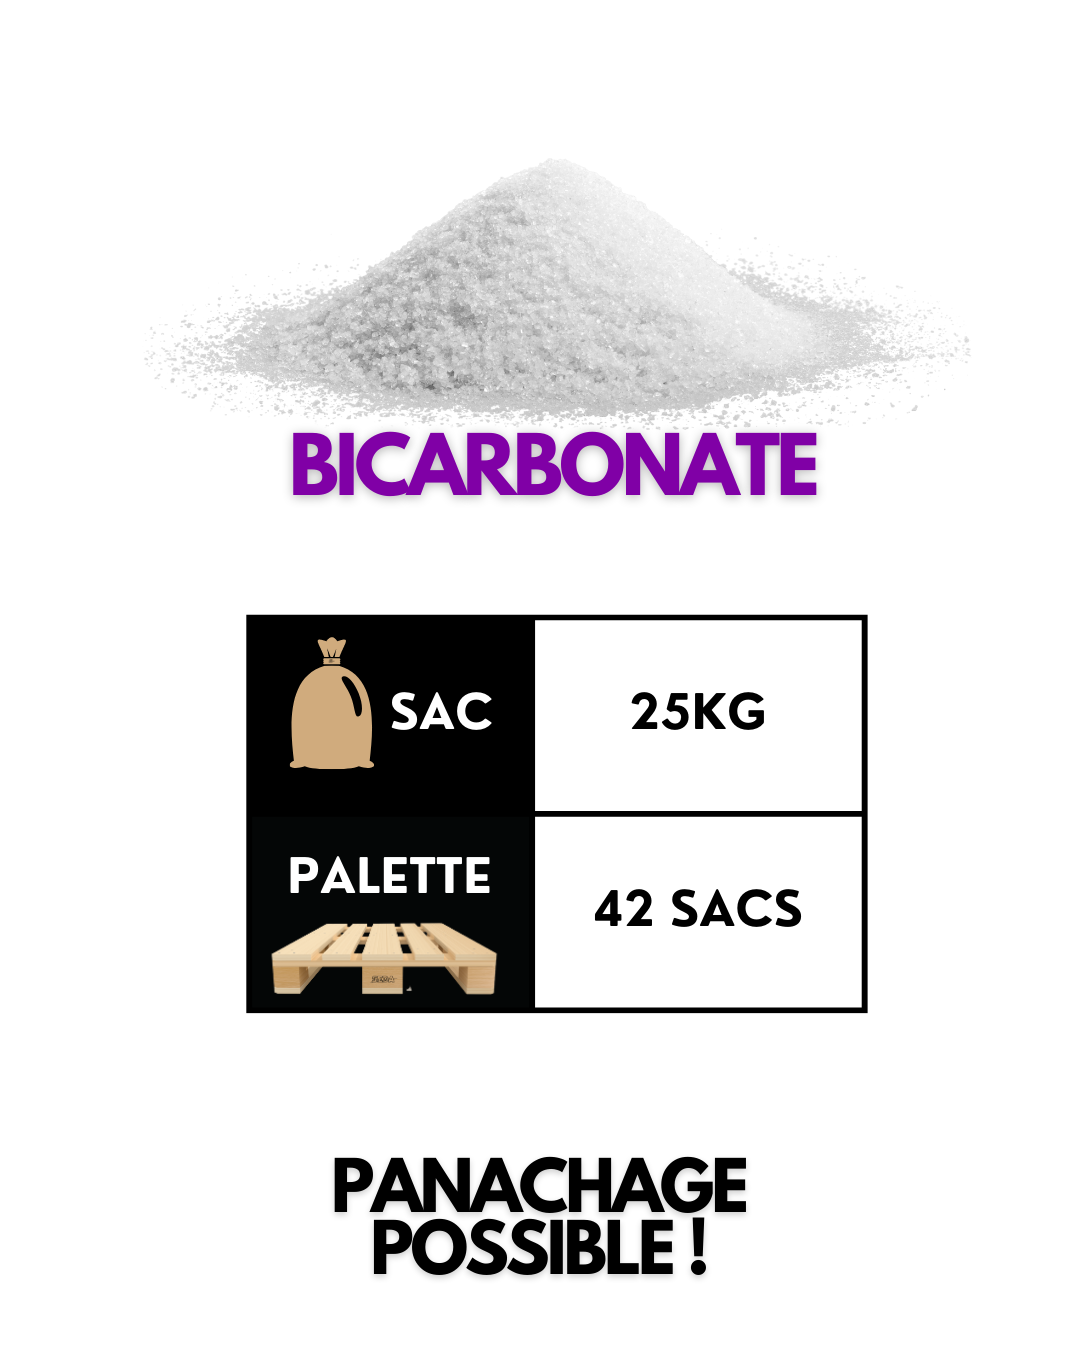 bicarbonate